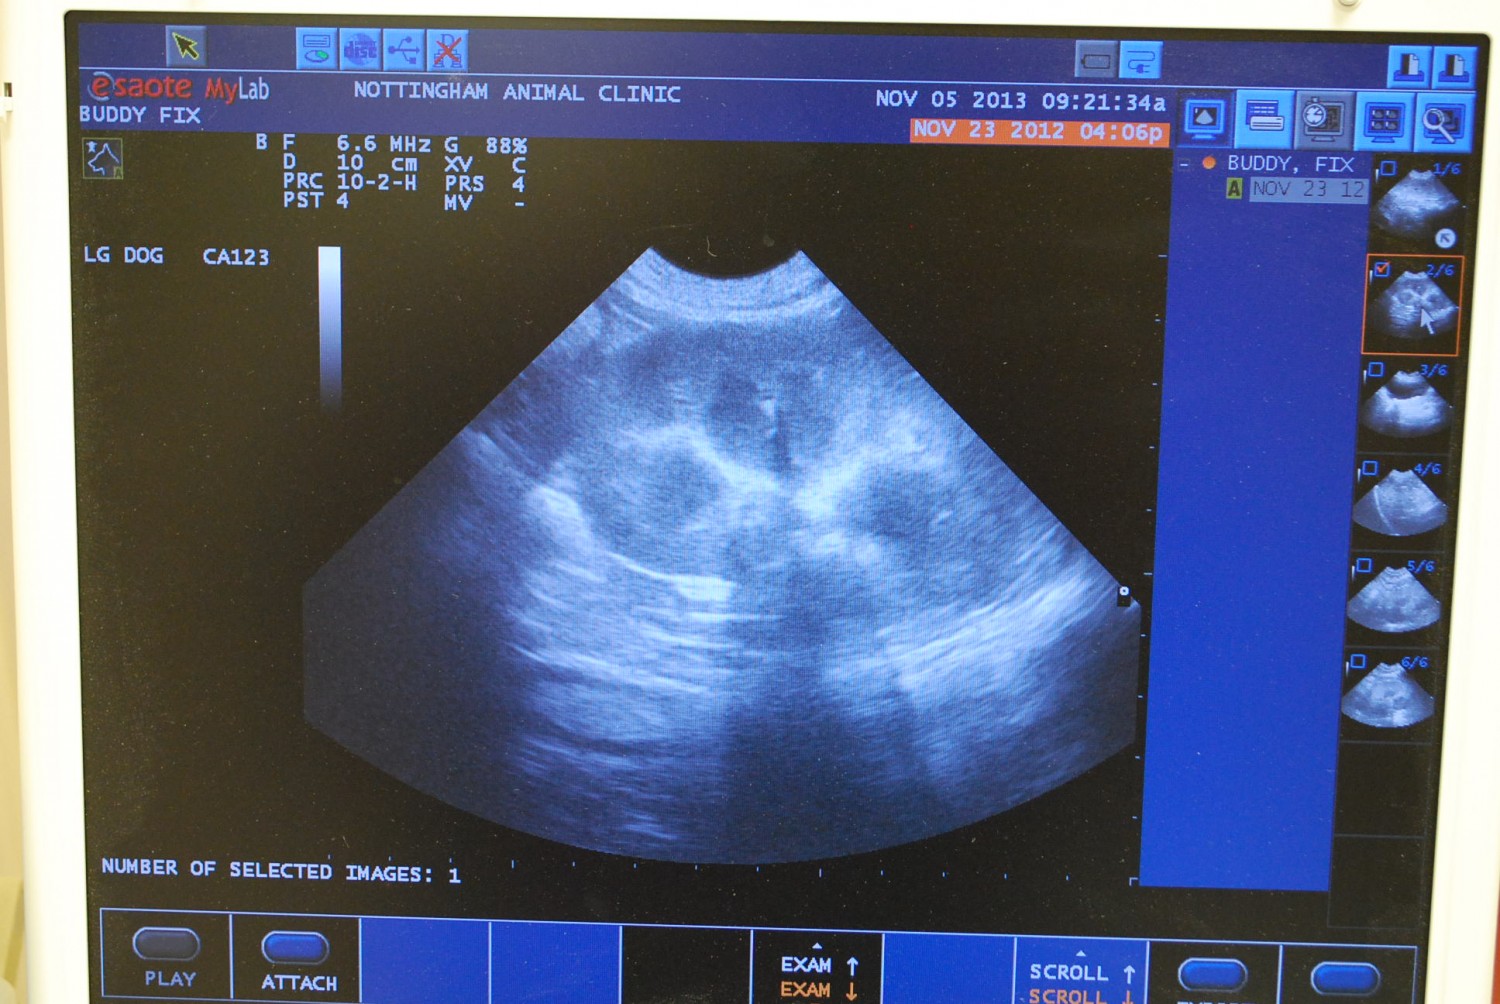 Nottingham Animal Clinic Kidney ultrasound